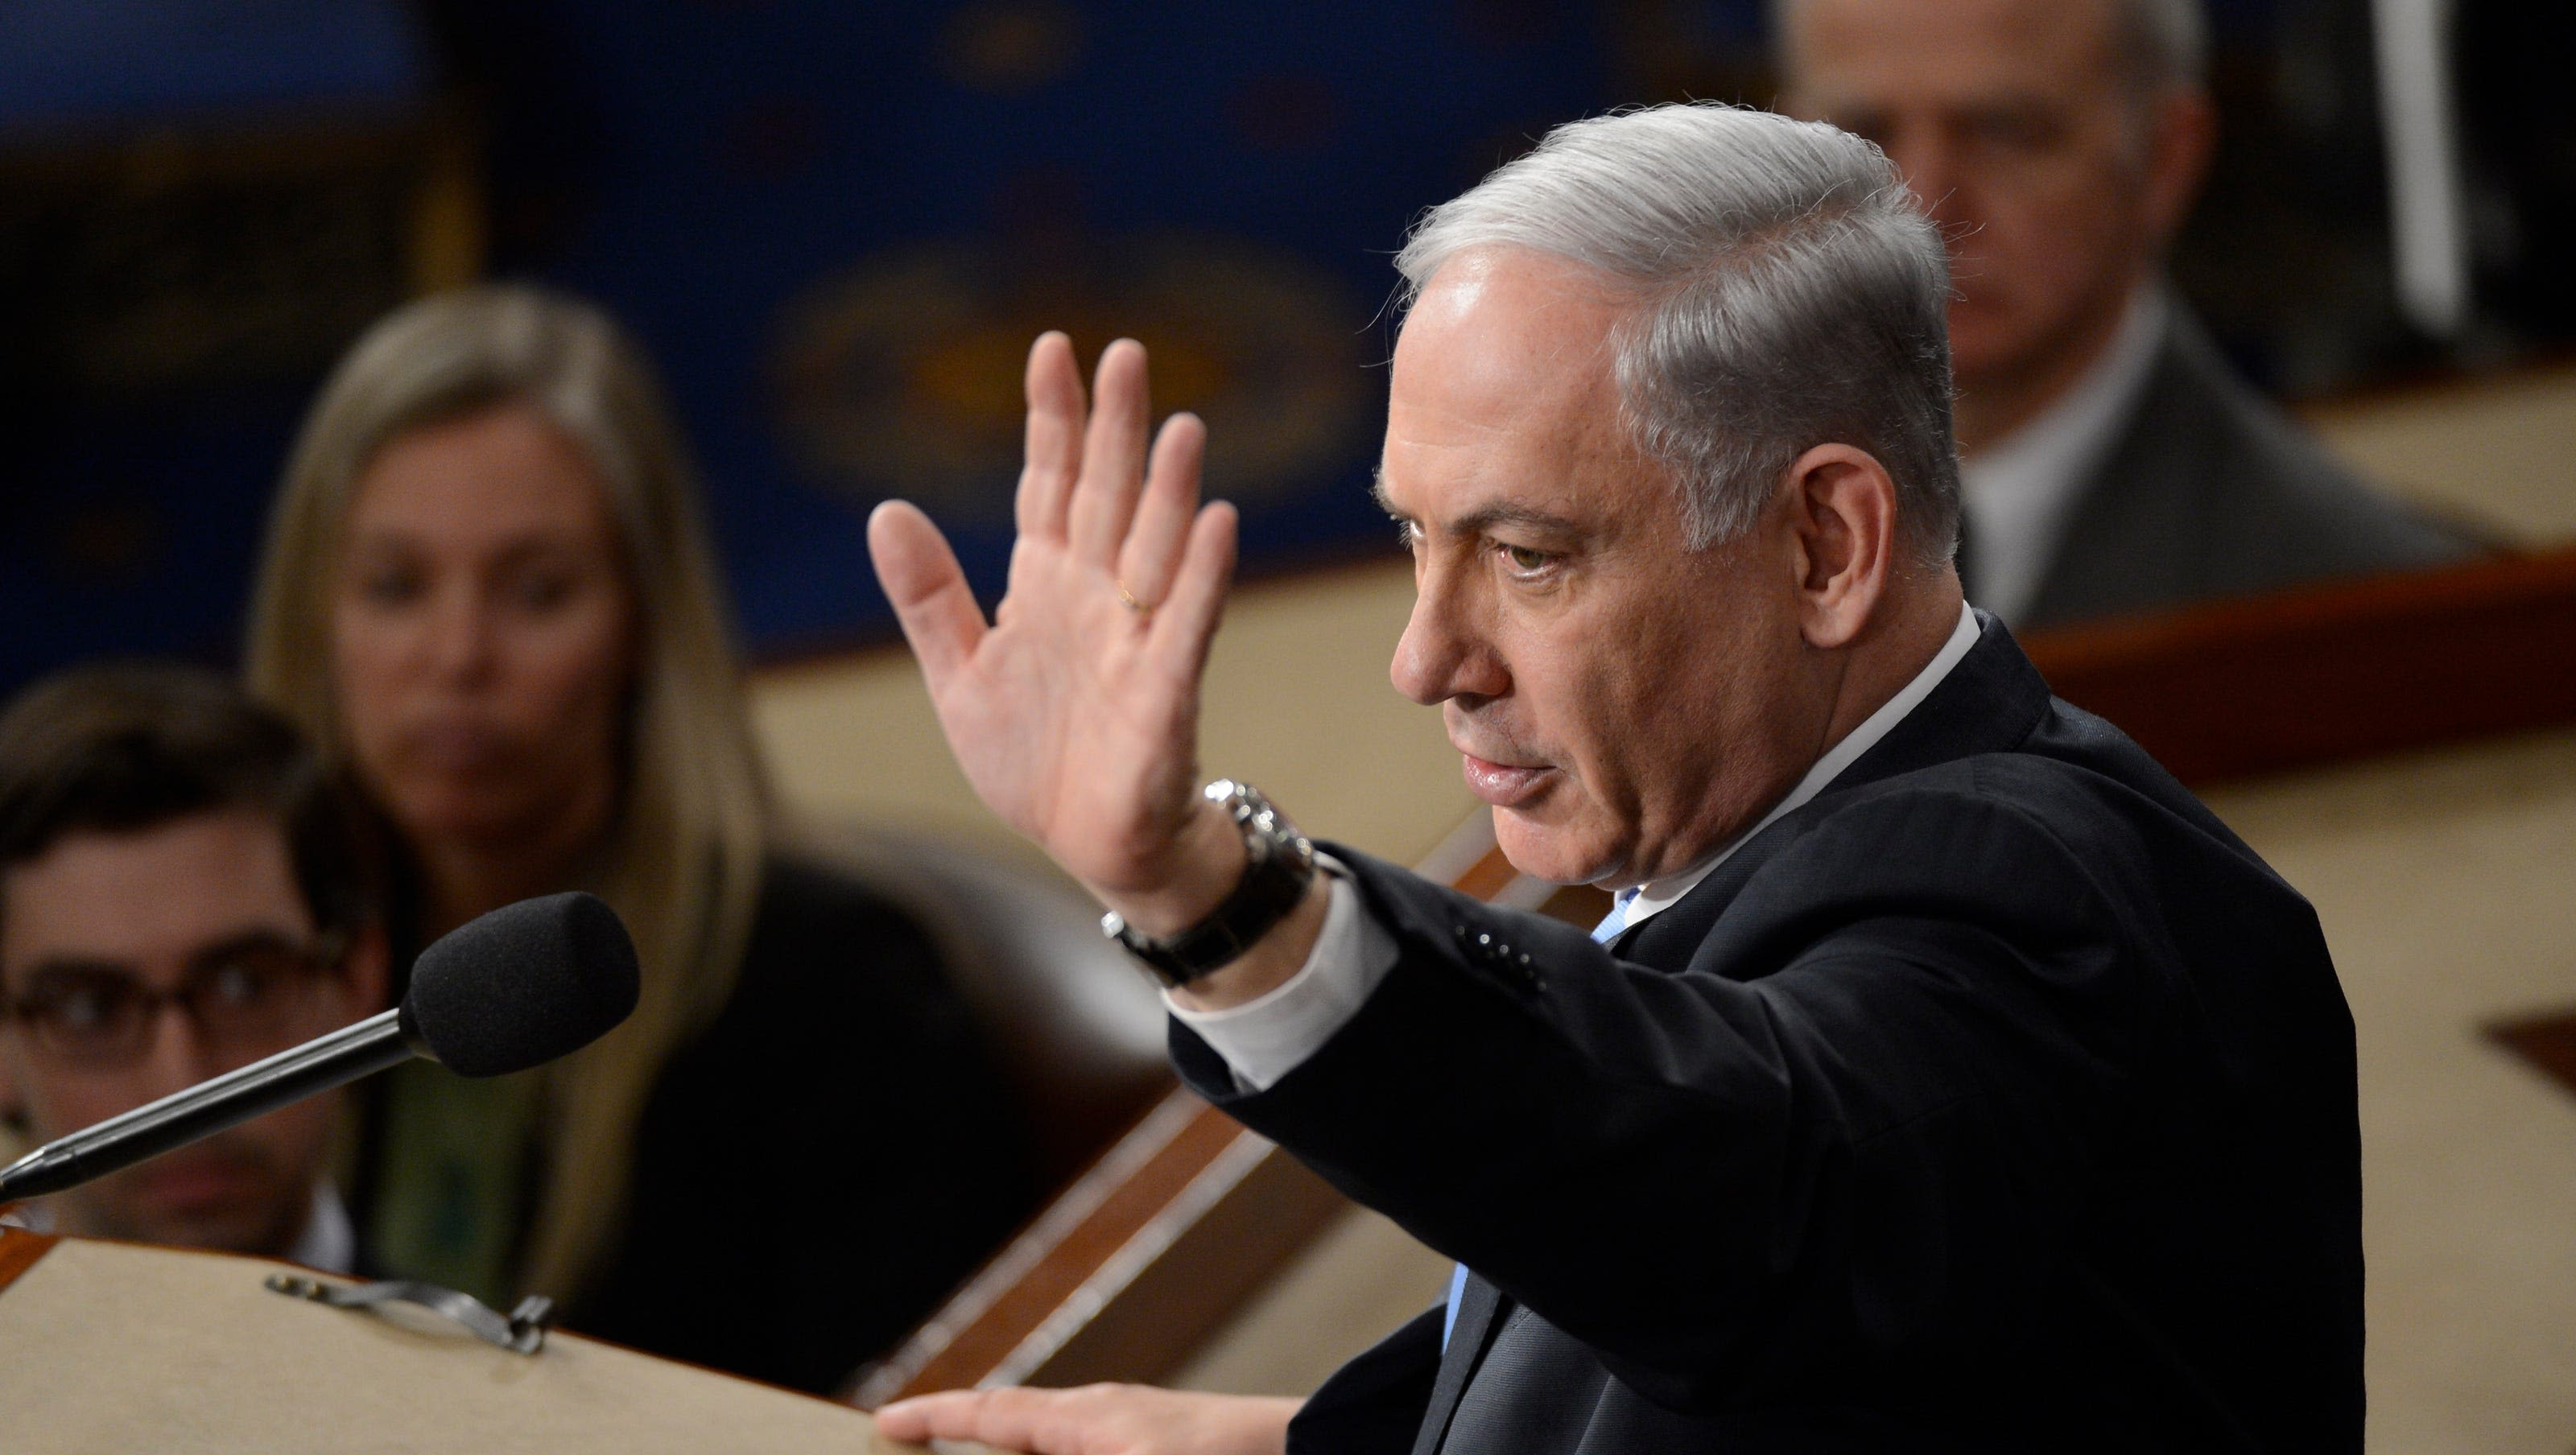 Schumer in talks with Johnson to invite Netanyahu to speak to Congress